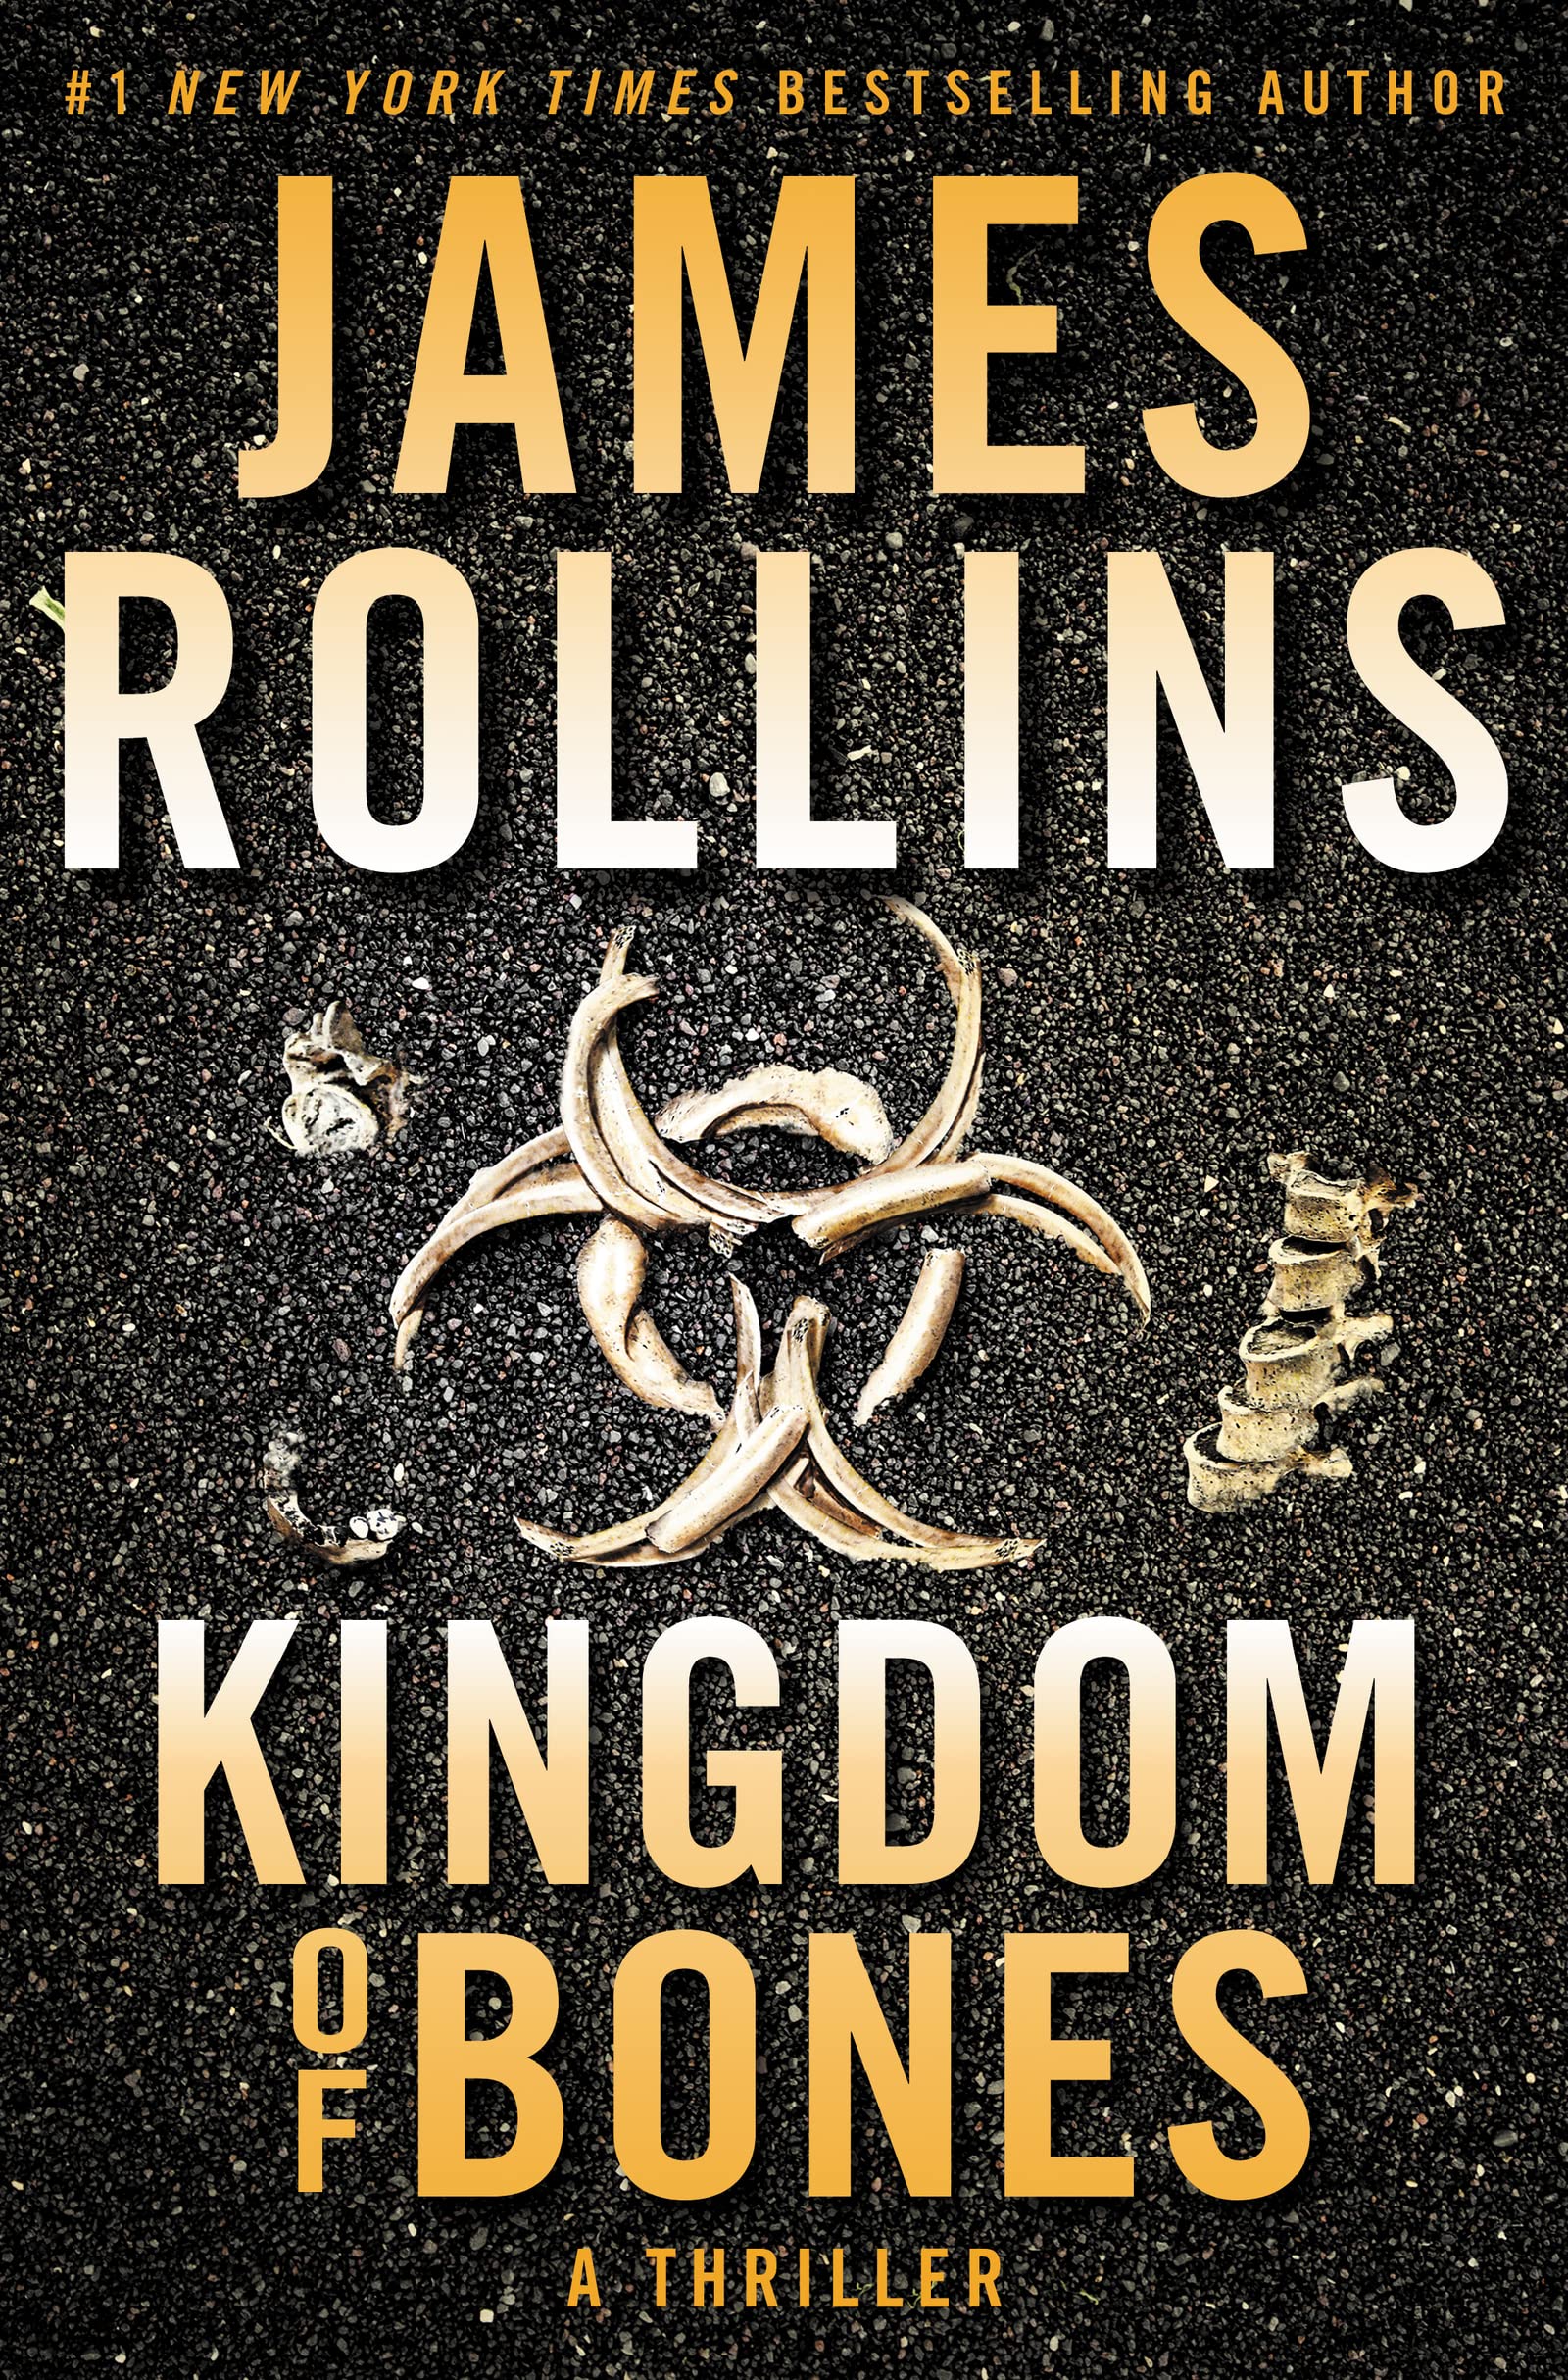 Kingdom Of Bones by James Rollins